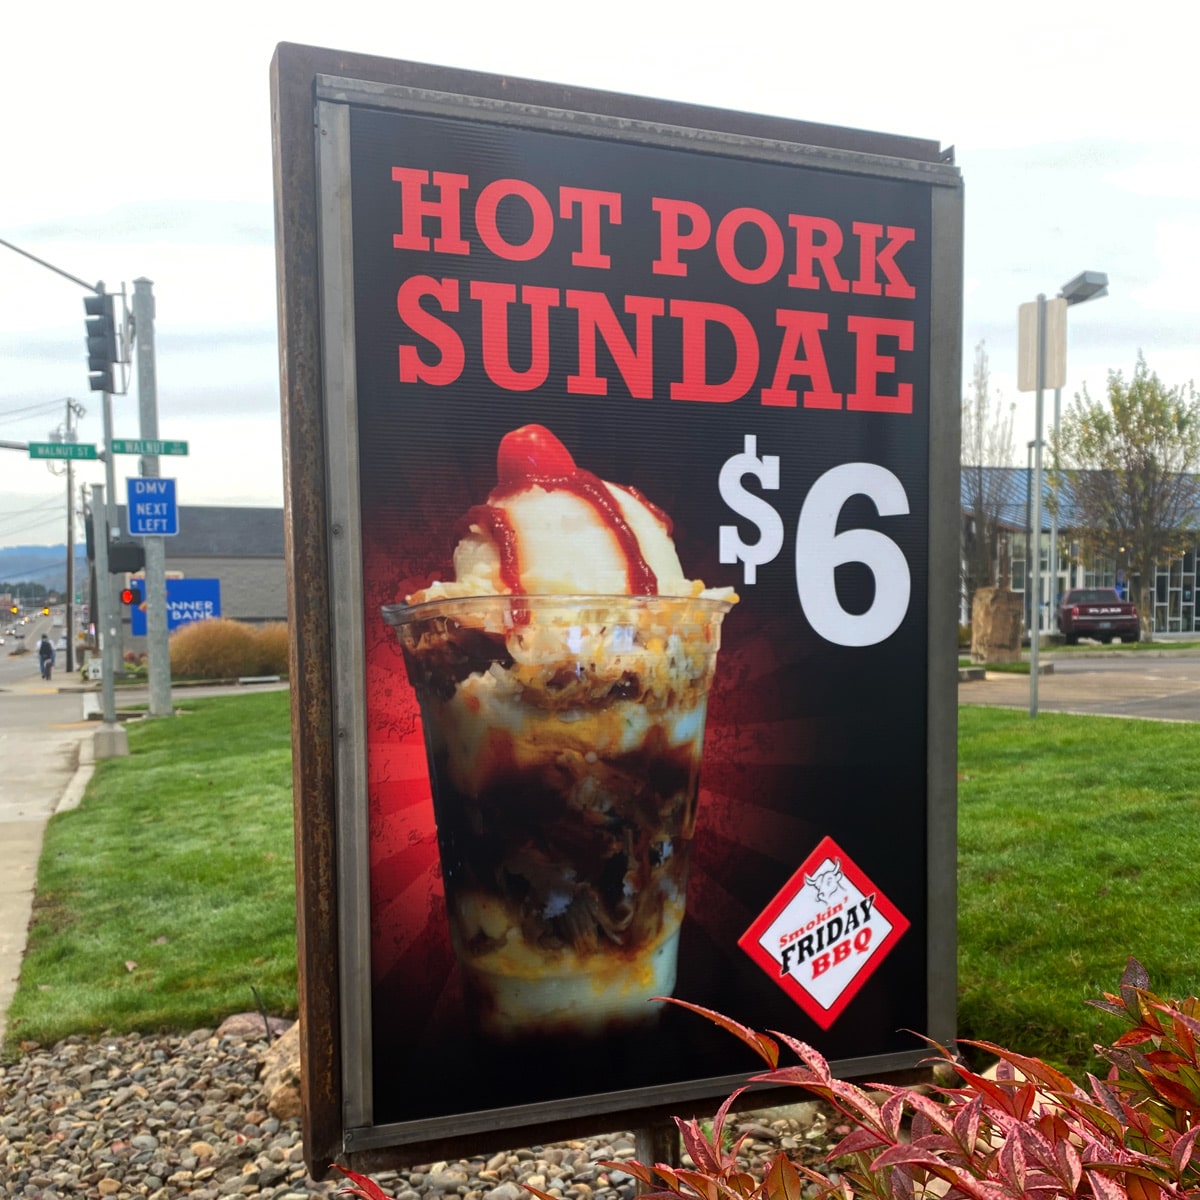 Street sign for promoting Hot Pork Sundae at Smokin Friday BBQ.